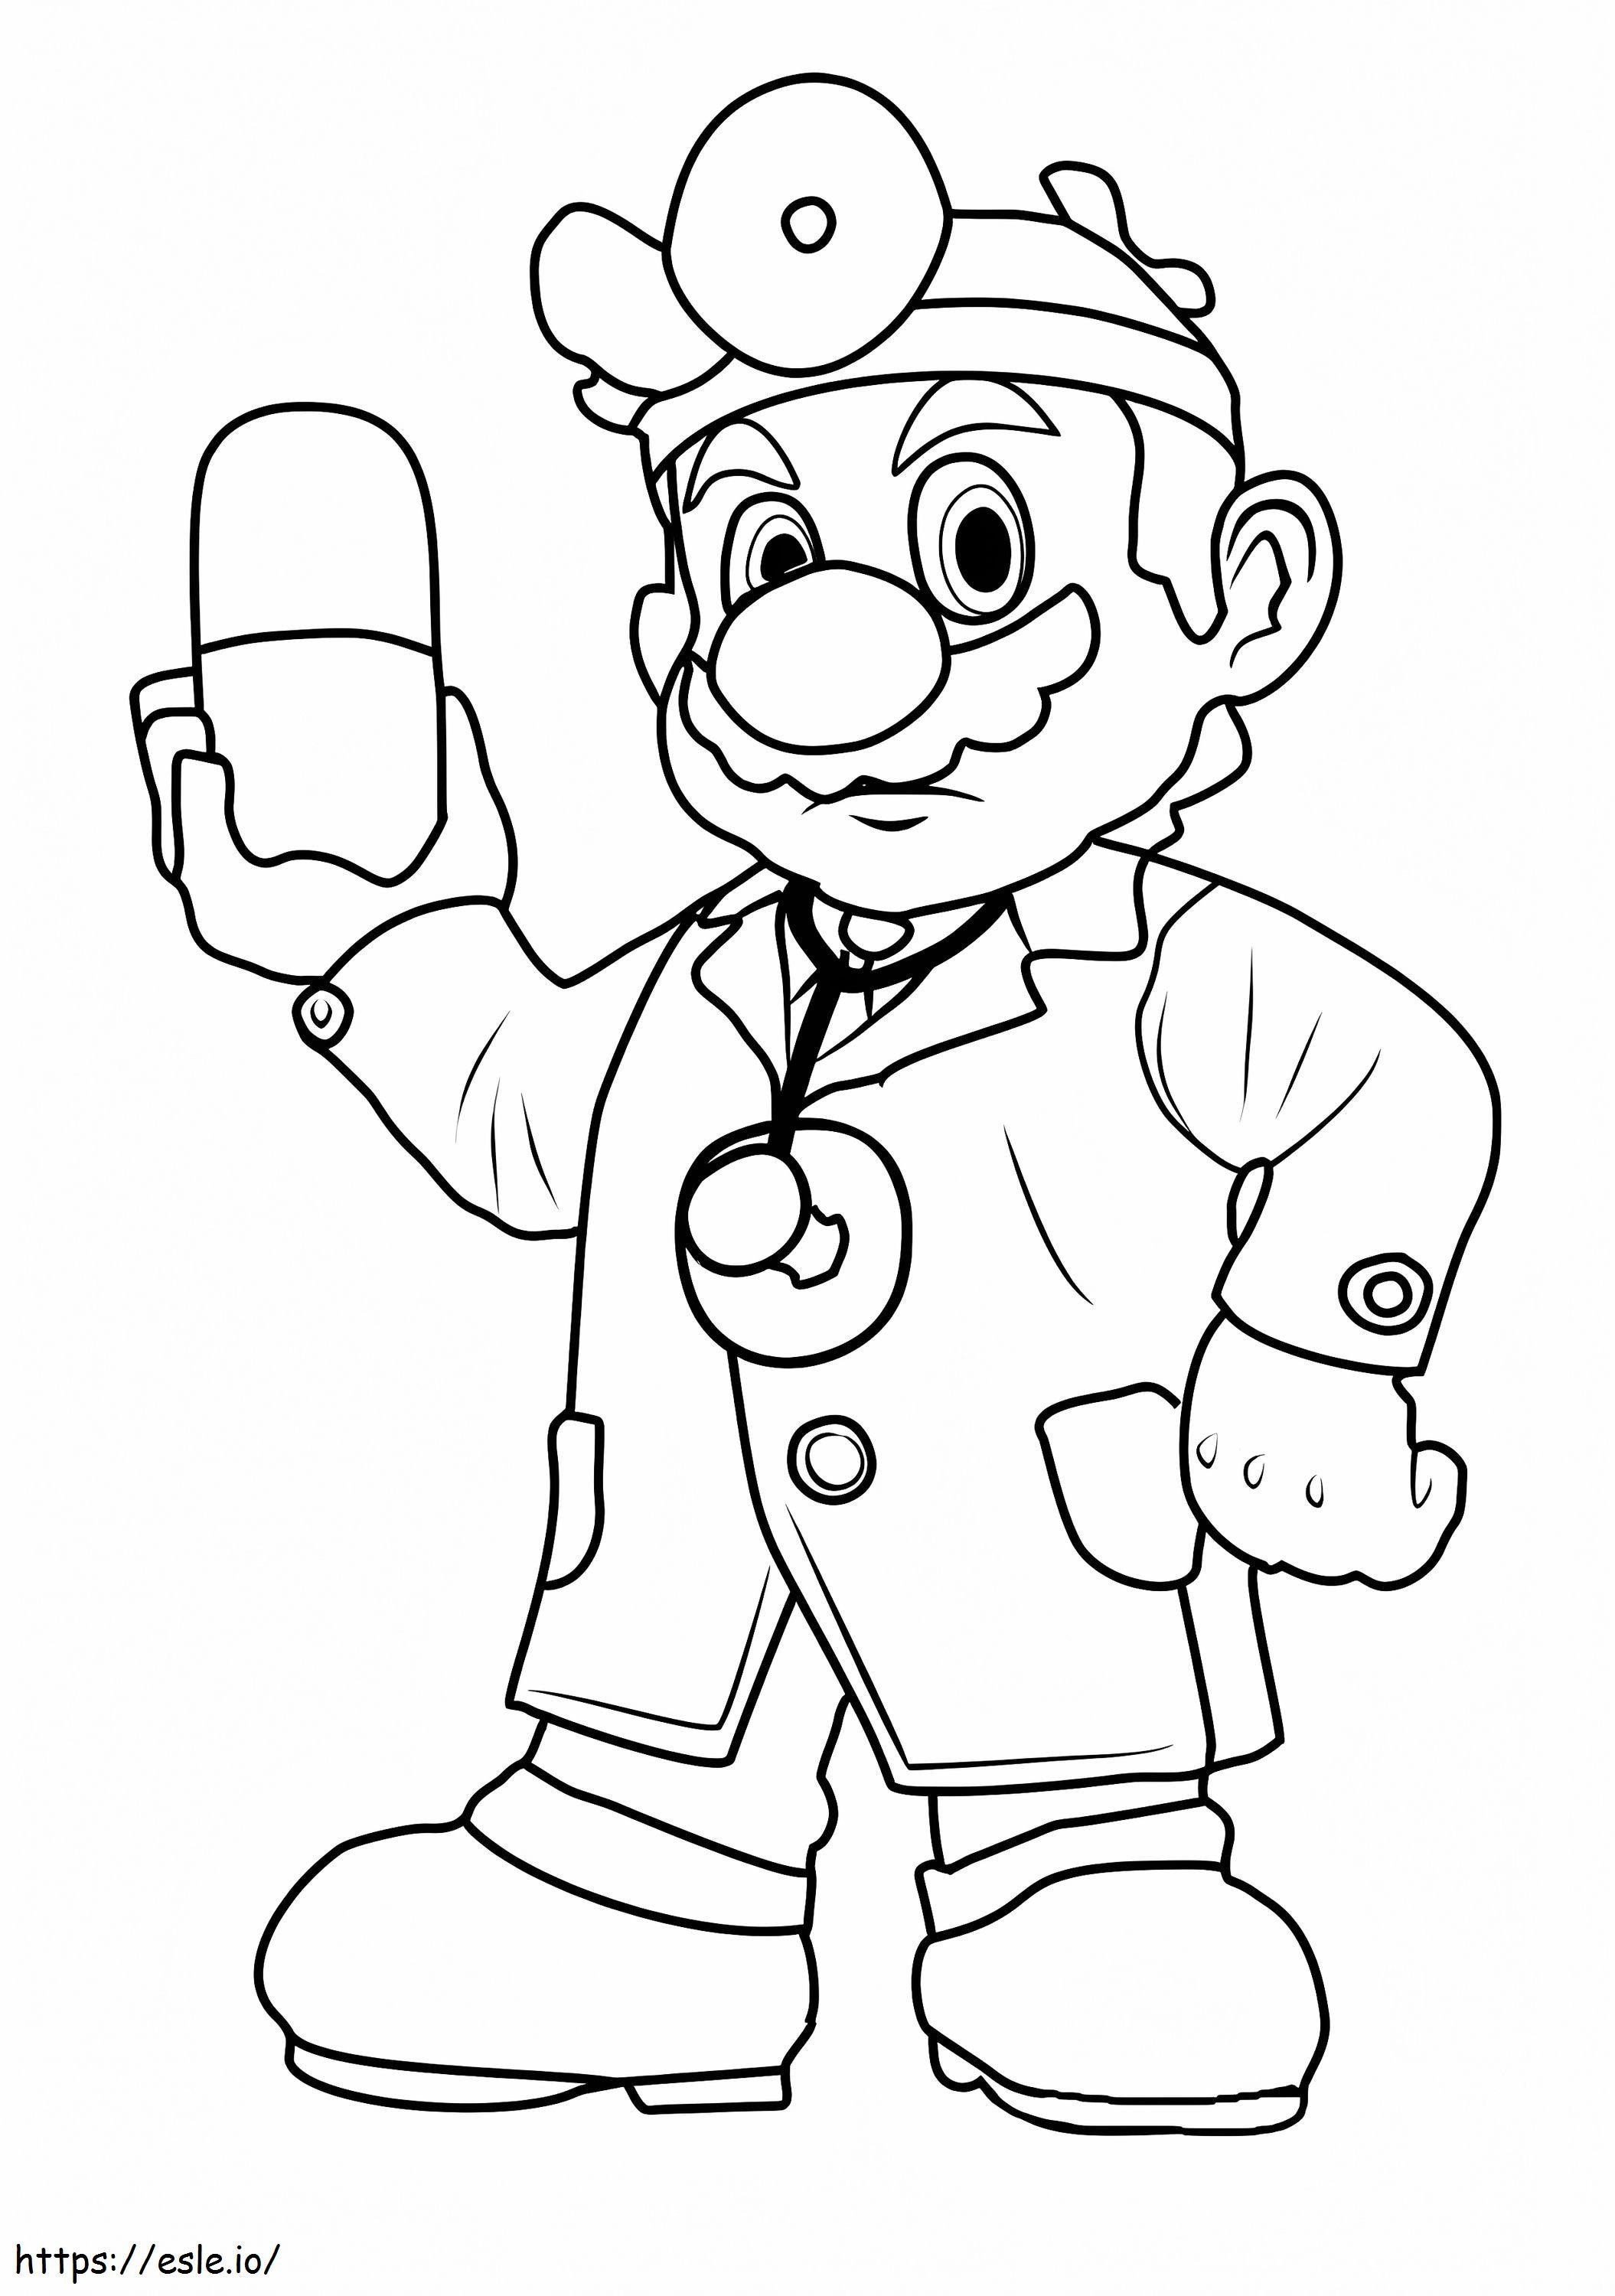 Doktor Mario ausmalbilder